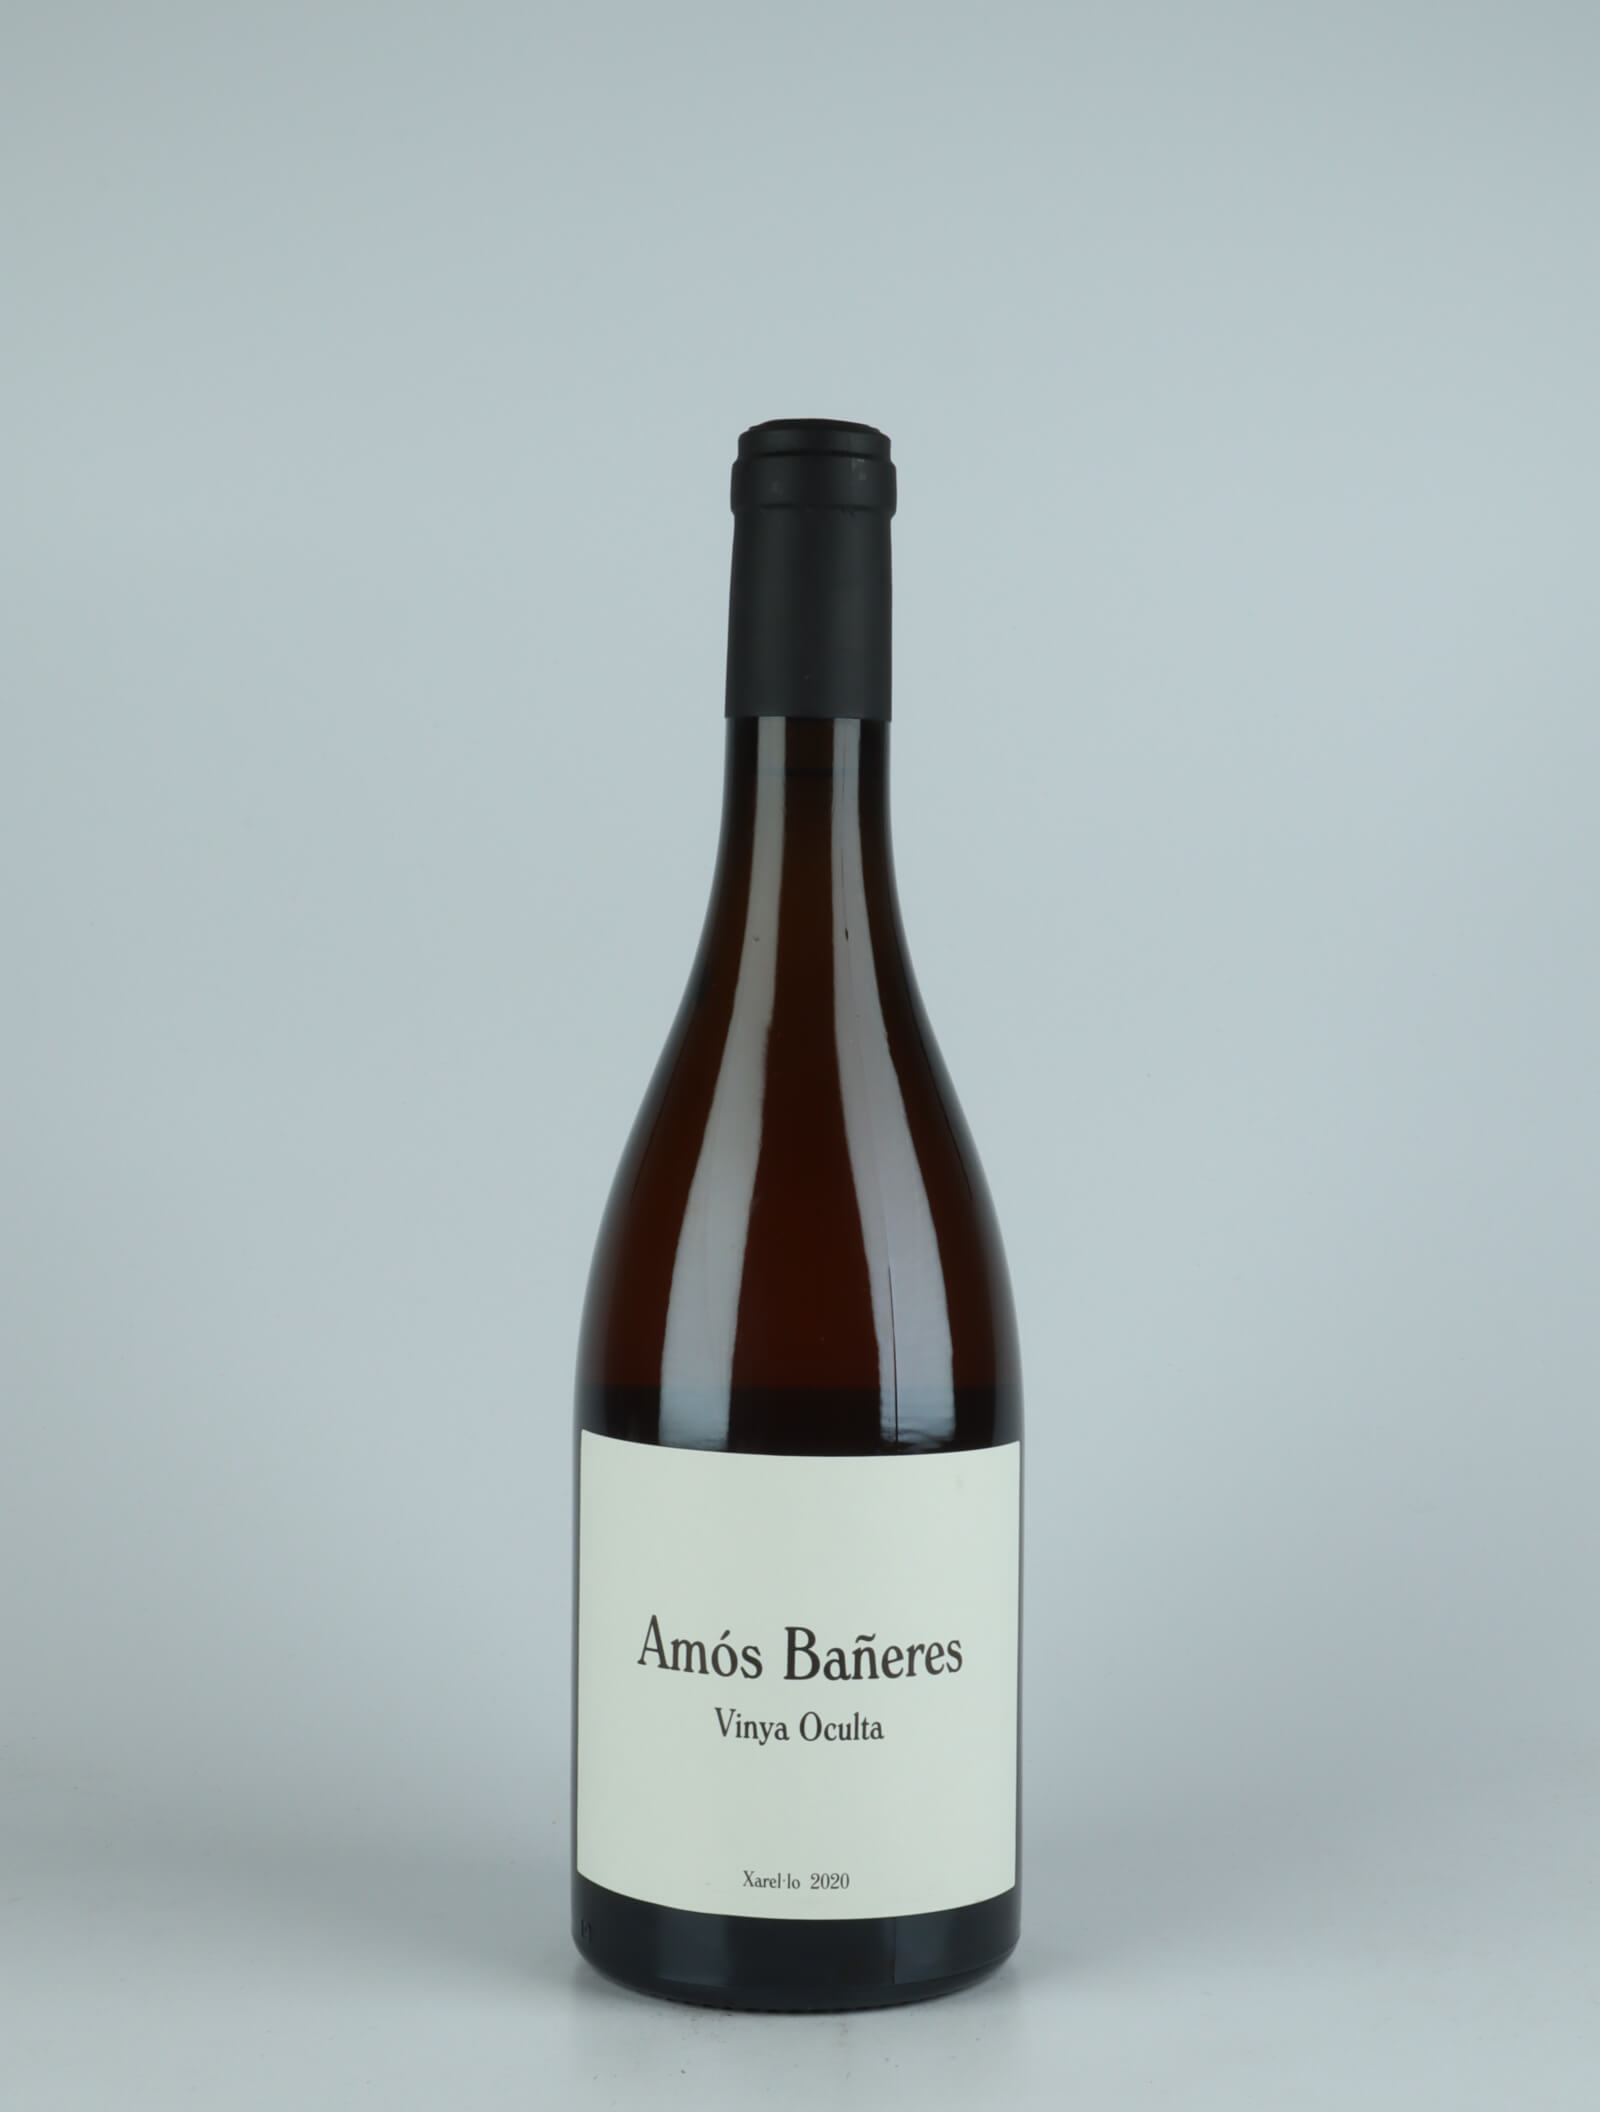 A bottle 2020 Vinya Oculta White wine from Amós Bañeres, Penedès in Spain